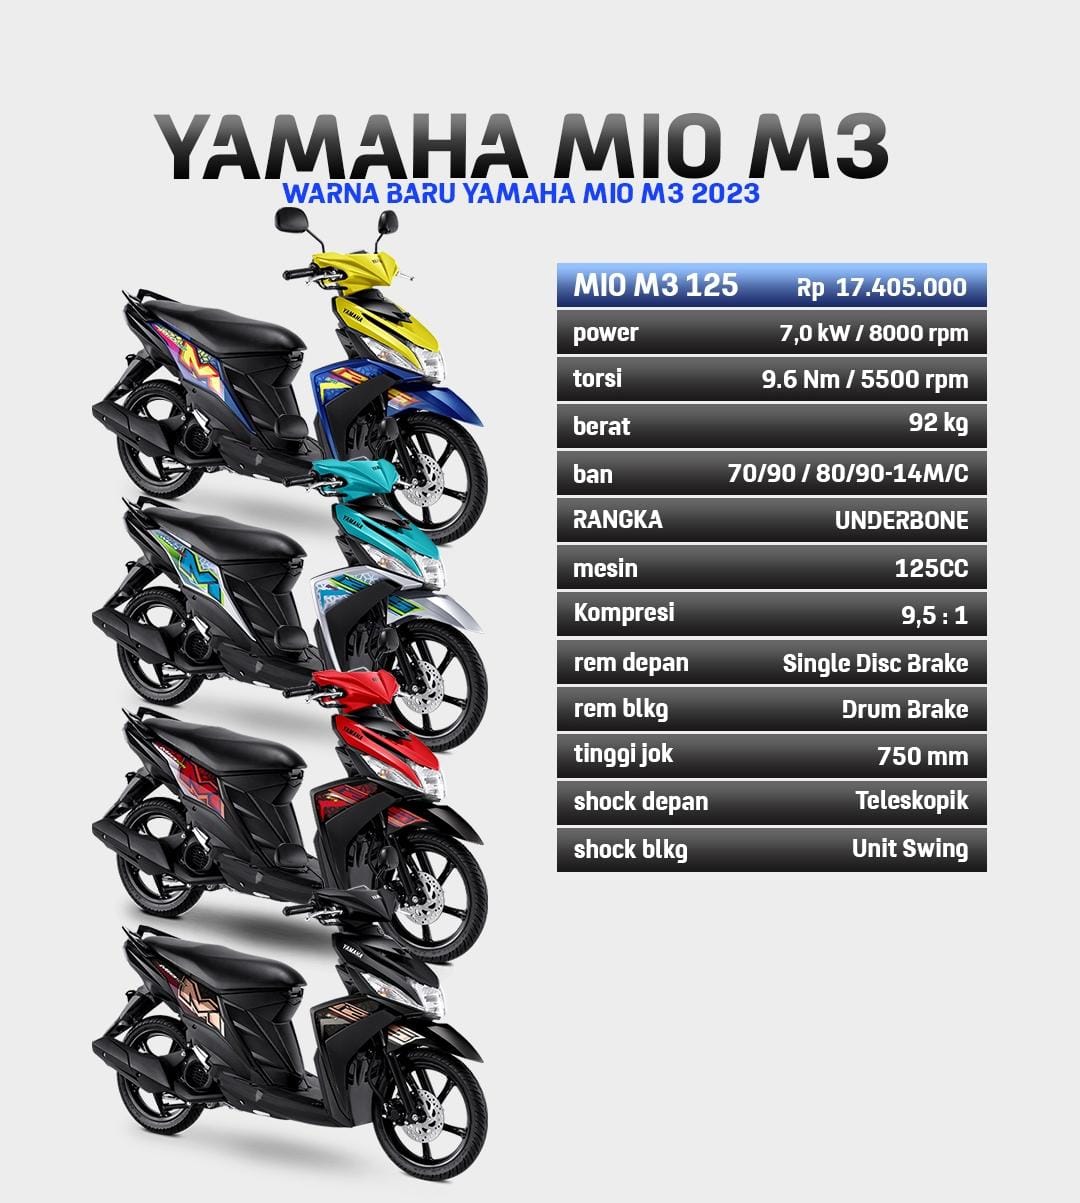 Yamaha Mio M3 Versi 2024 Warna Baru Konsisten Semakin Percaya Diri, Garansi Rangka 5 Tahun!